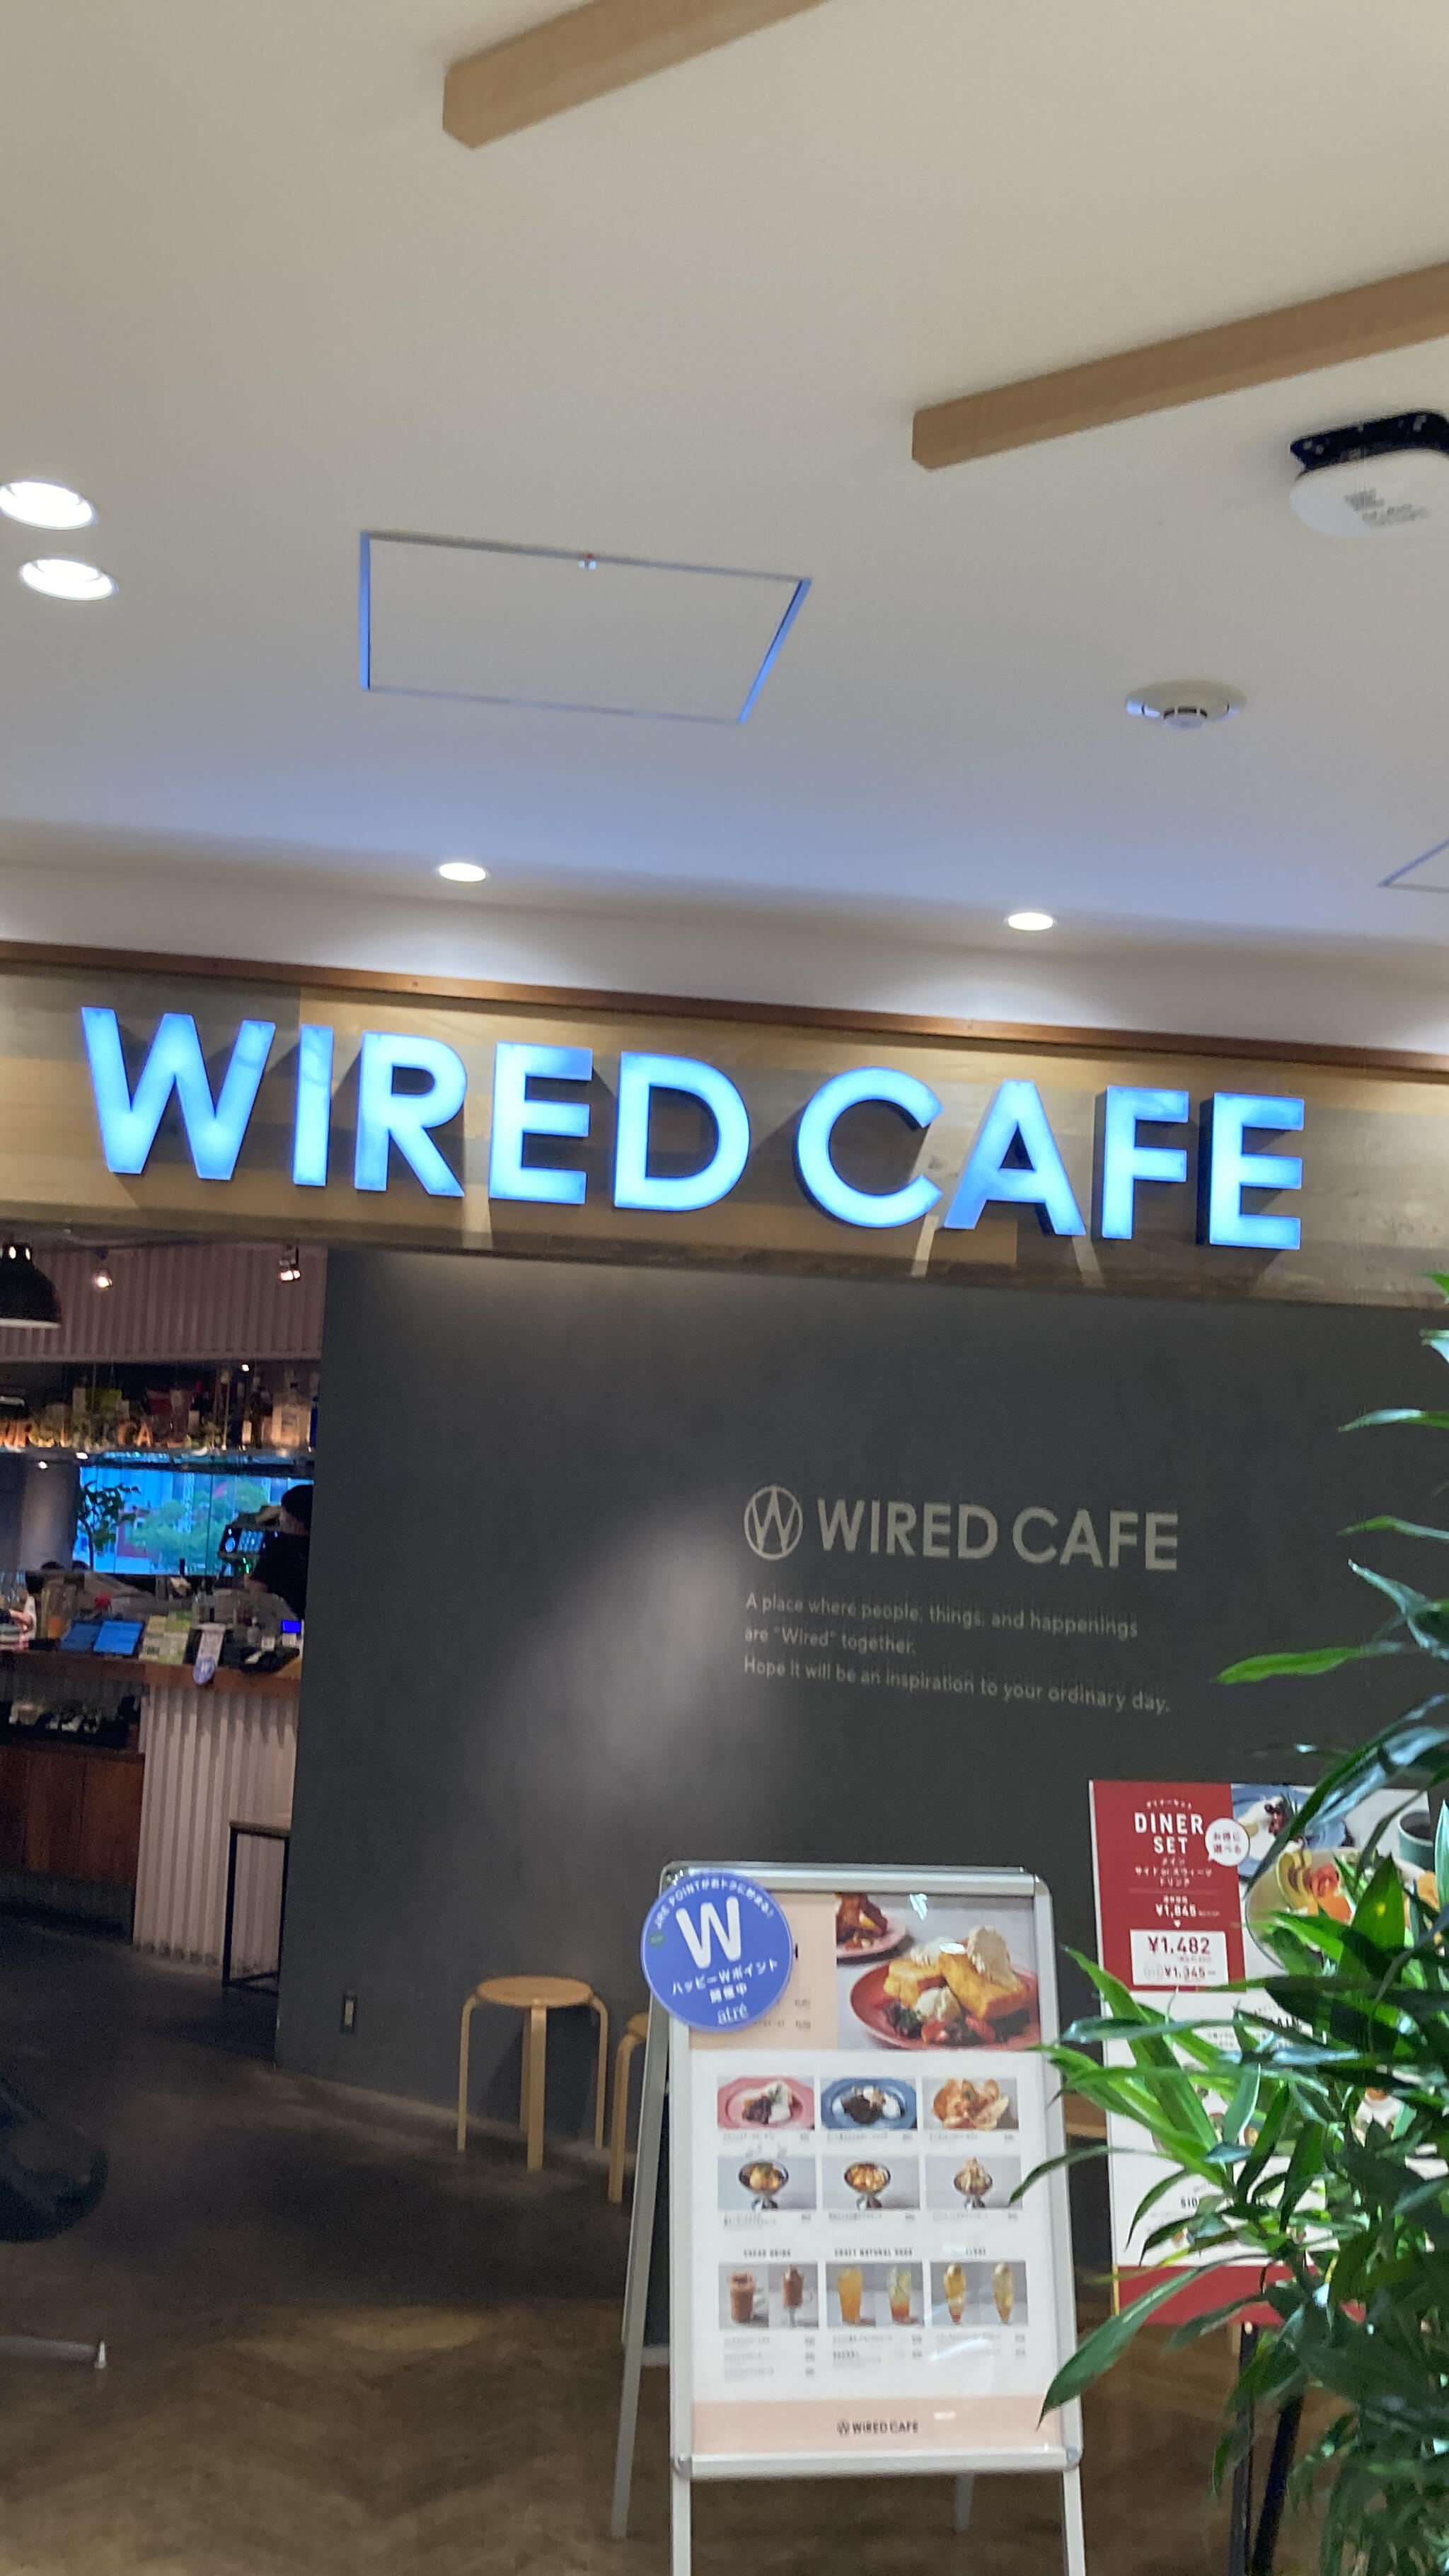 WIRED CAFE アトレ川崎店の代表写真10